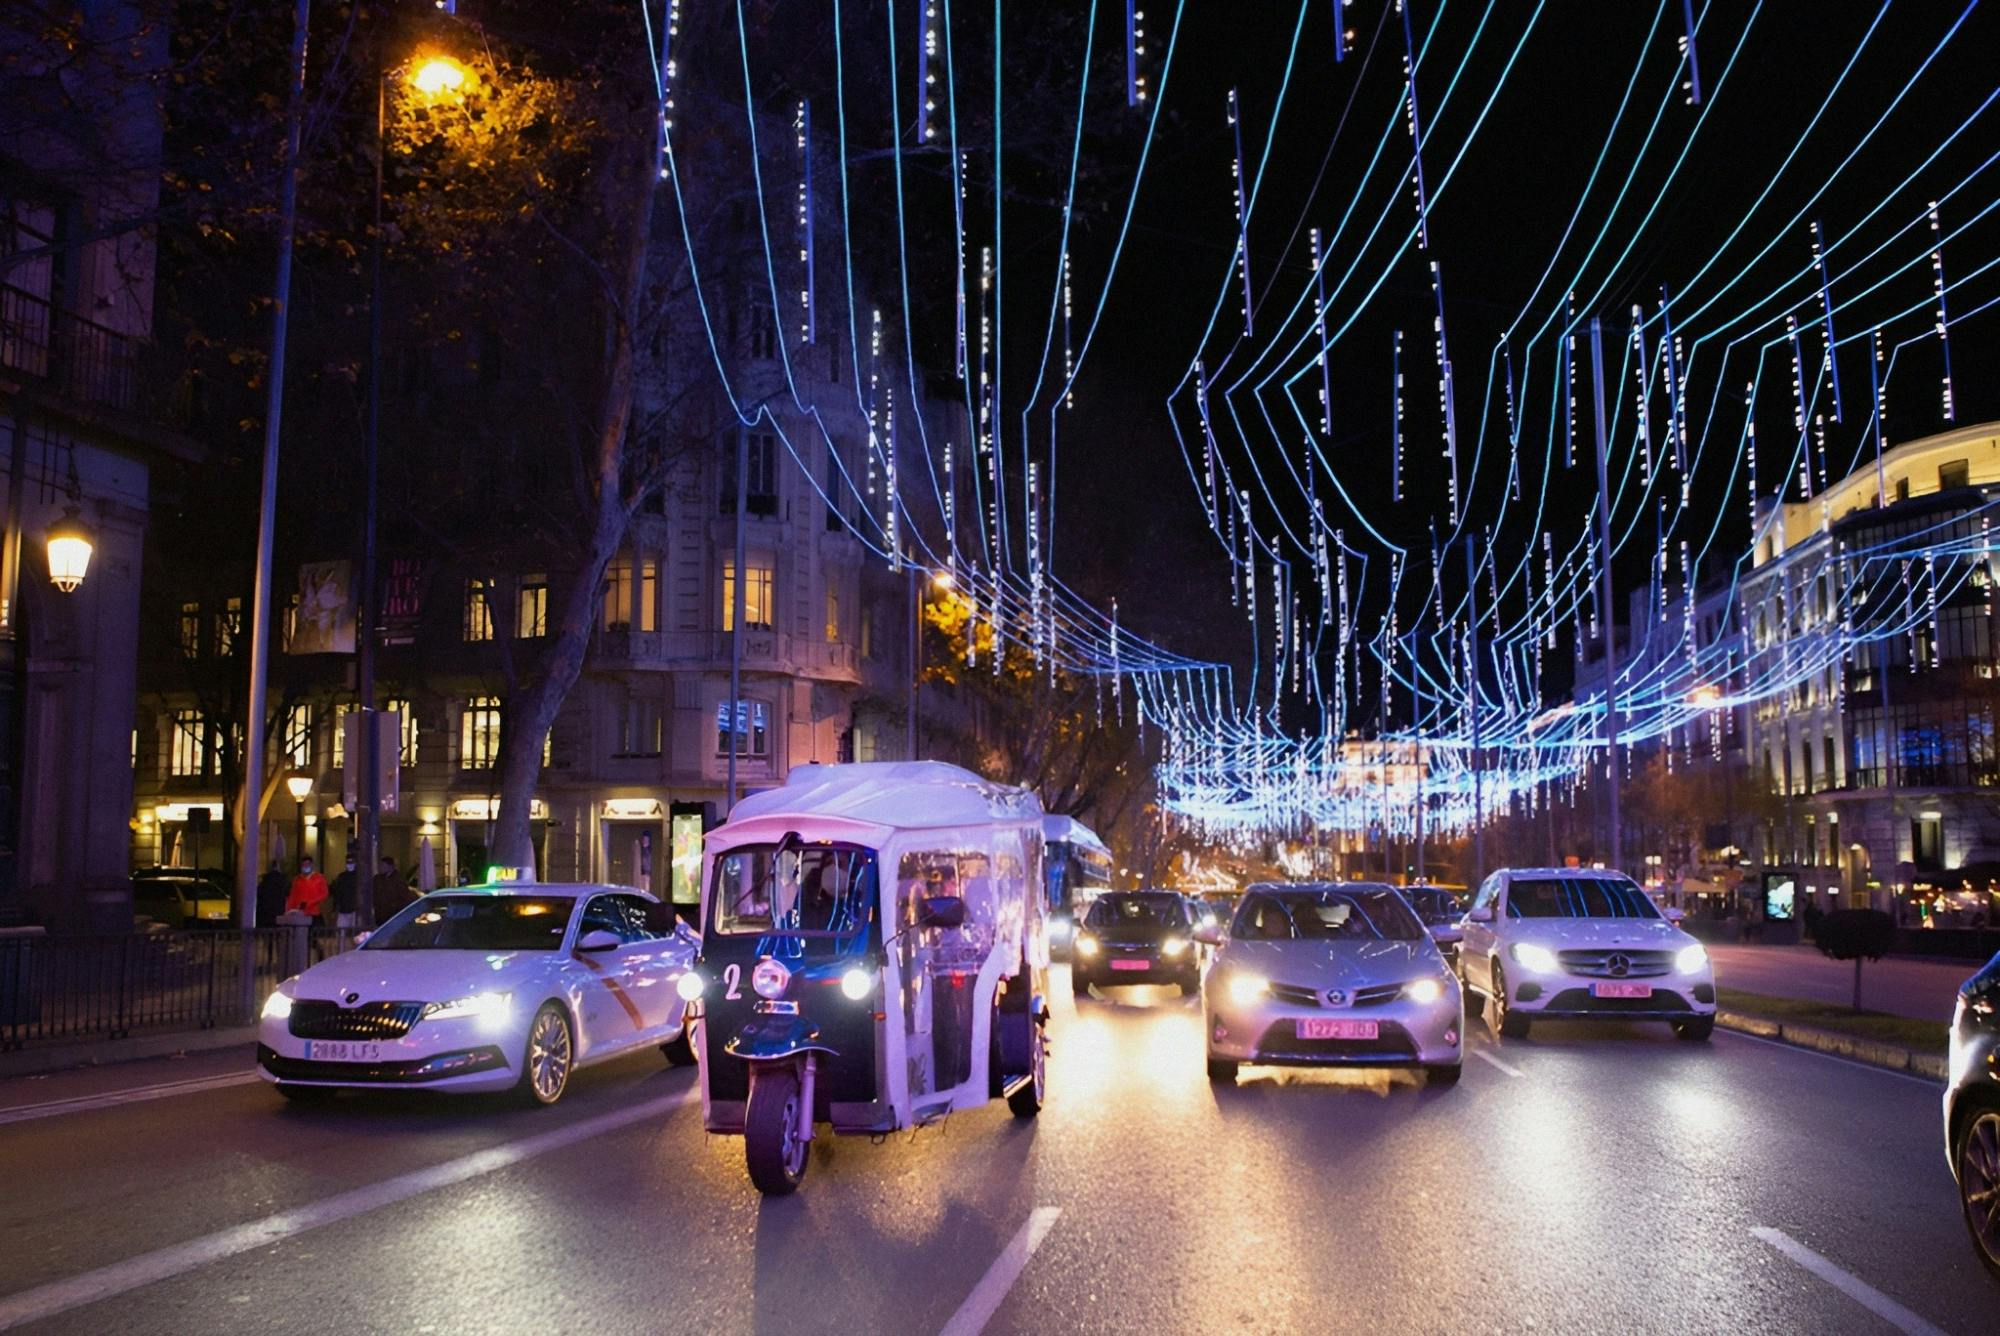 Weihnachtsbeleuchtungstour durch Madrid im privaten Eco Tuk Tuk